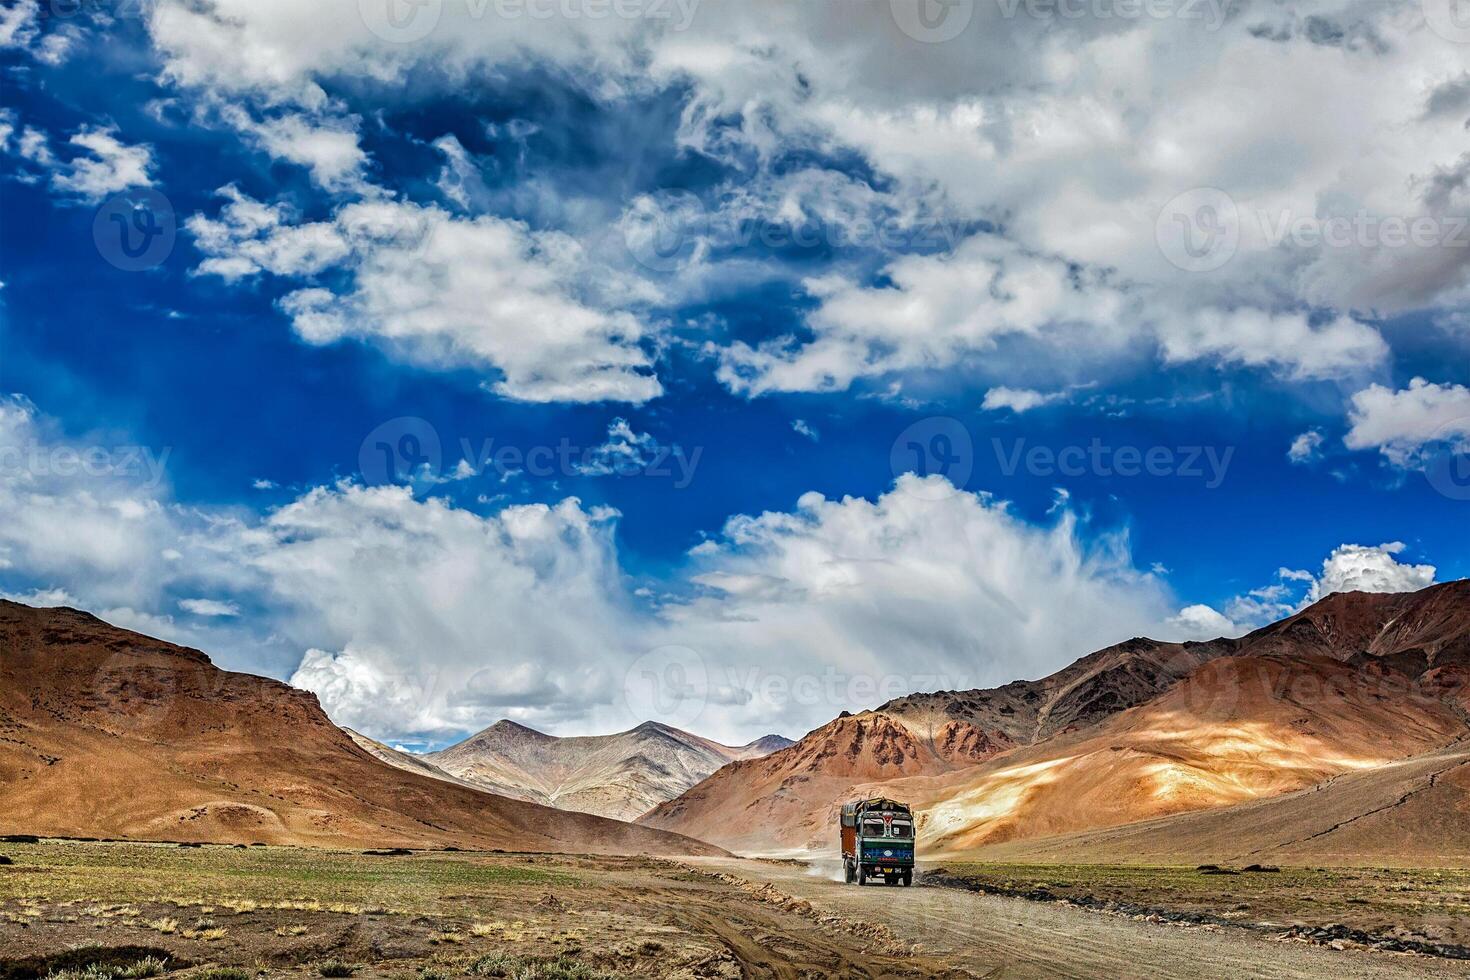 indiano caminhão em trans-himalaia manali-leh rodovia dentro Himalaia. foto